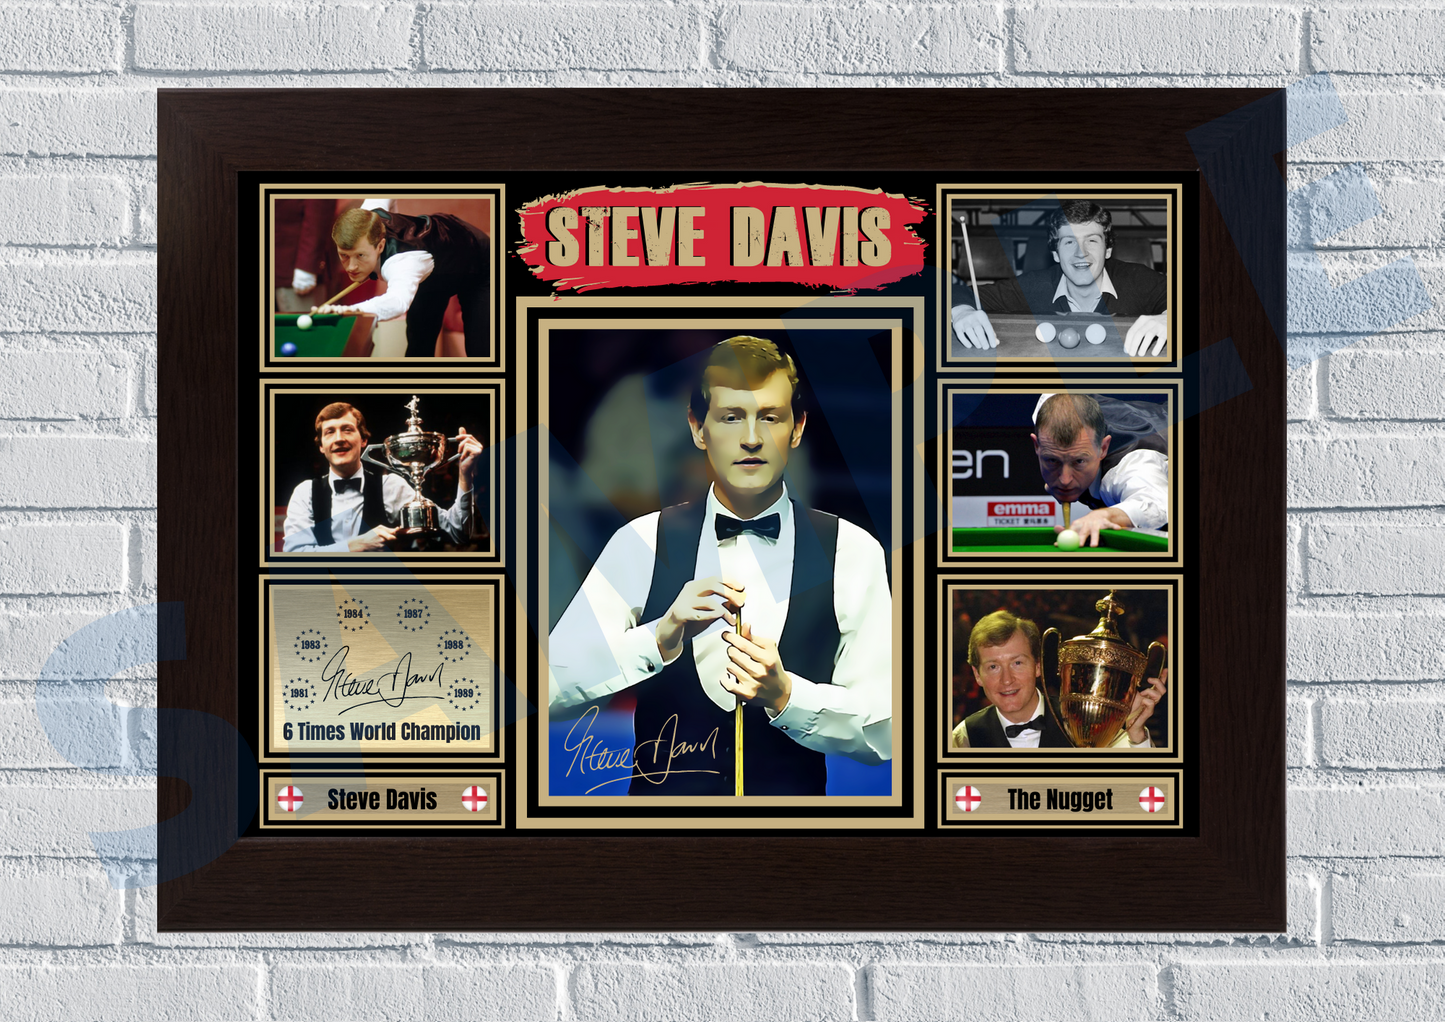 Steve Davis (Snooker) #15 - Collectible/Memorabilia/Print signed